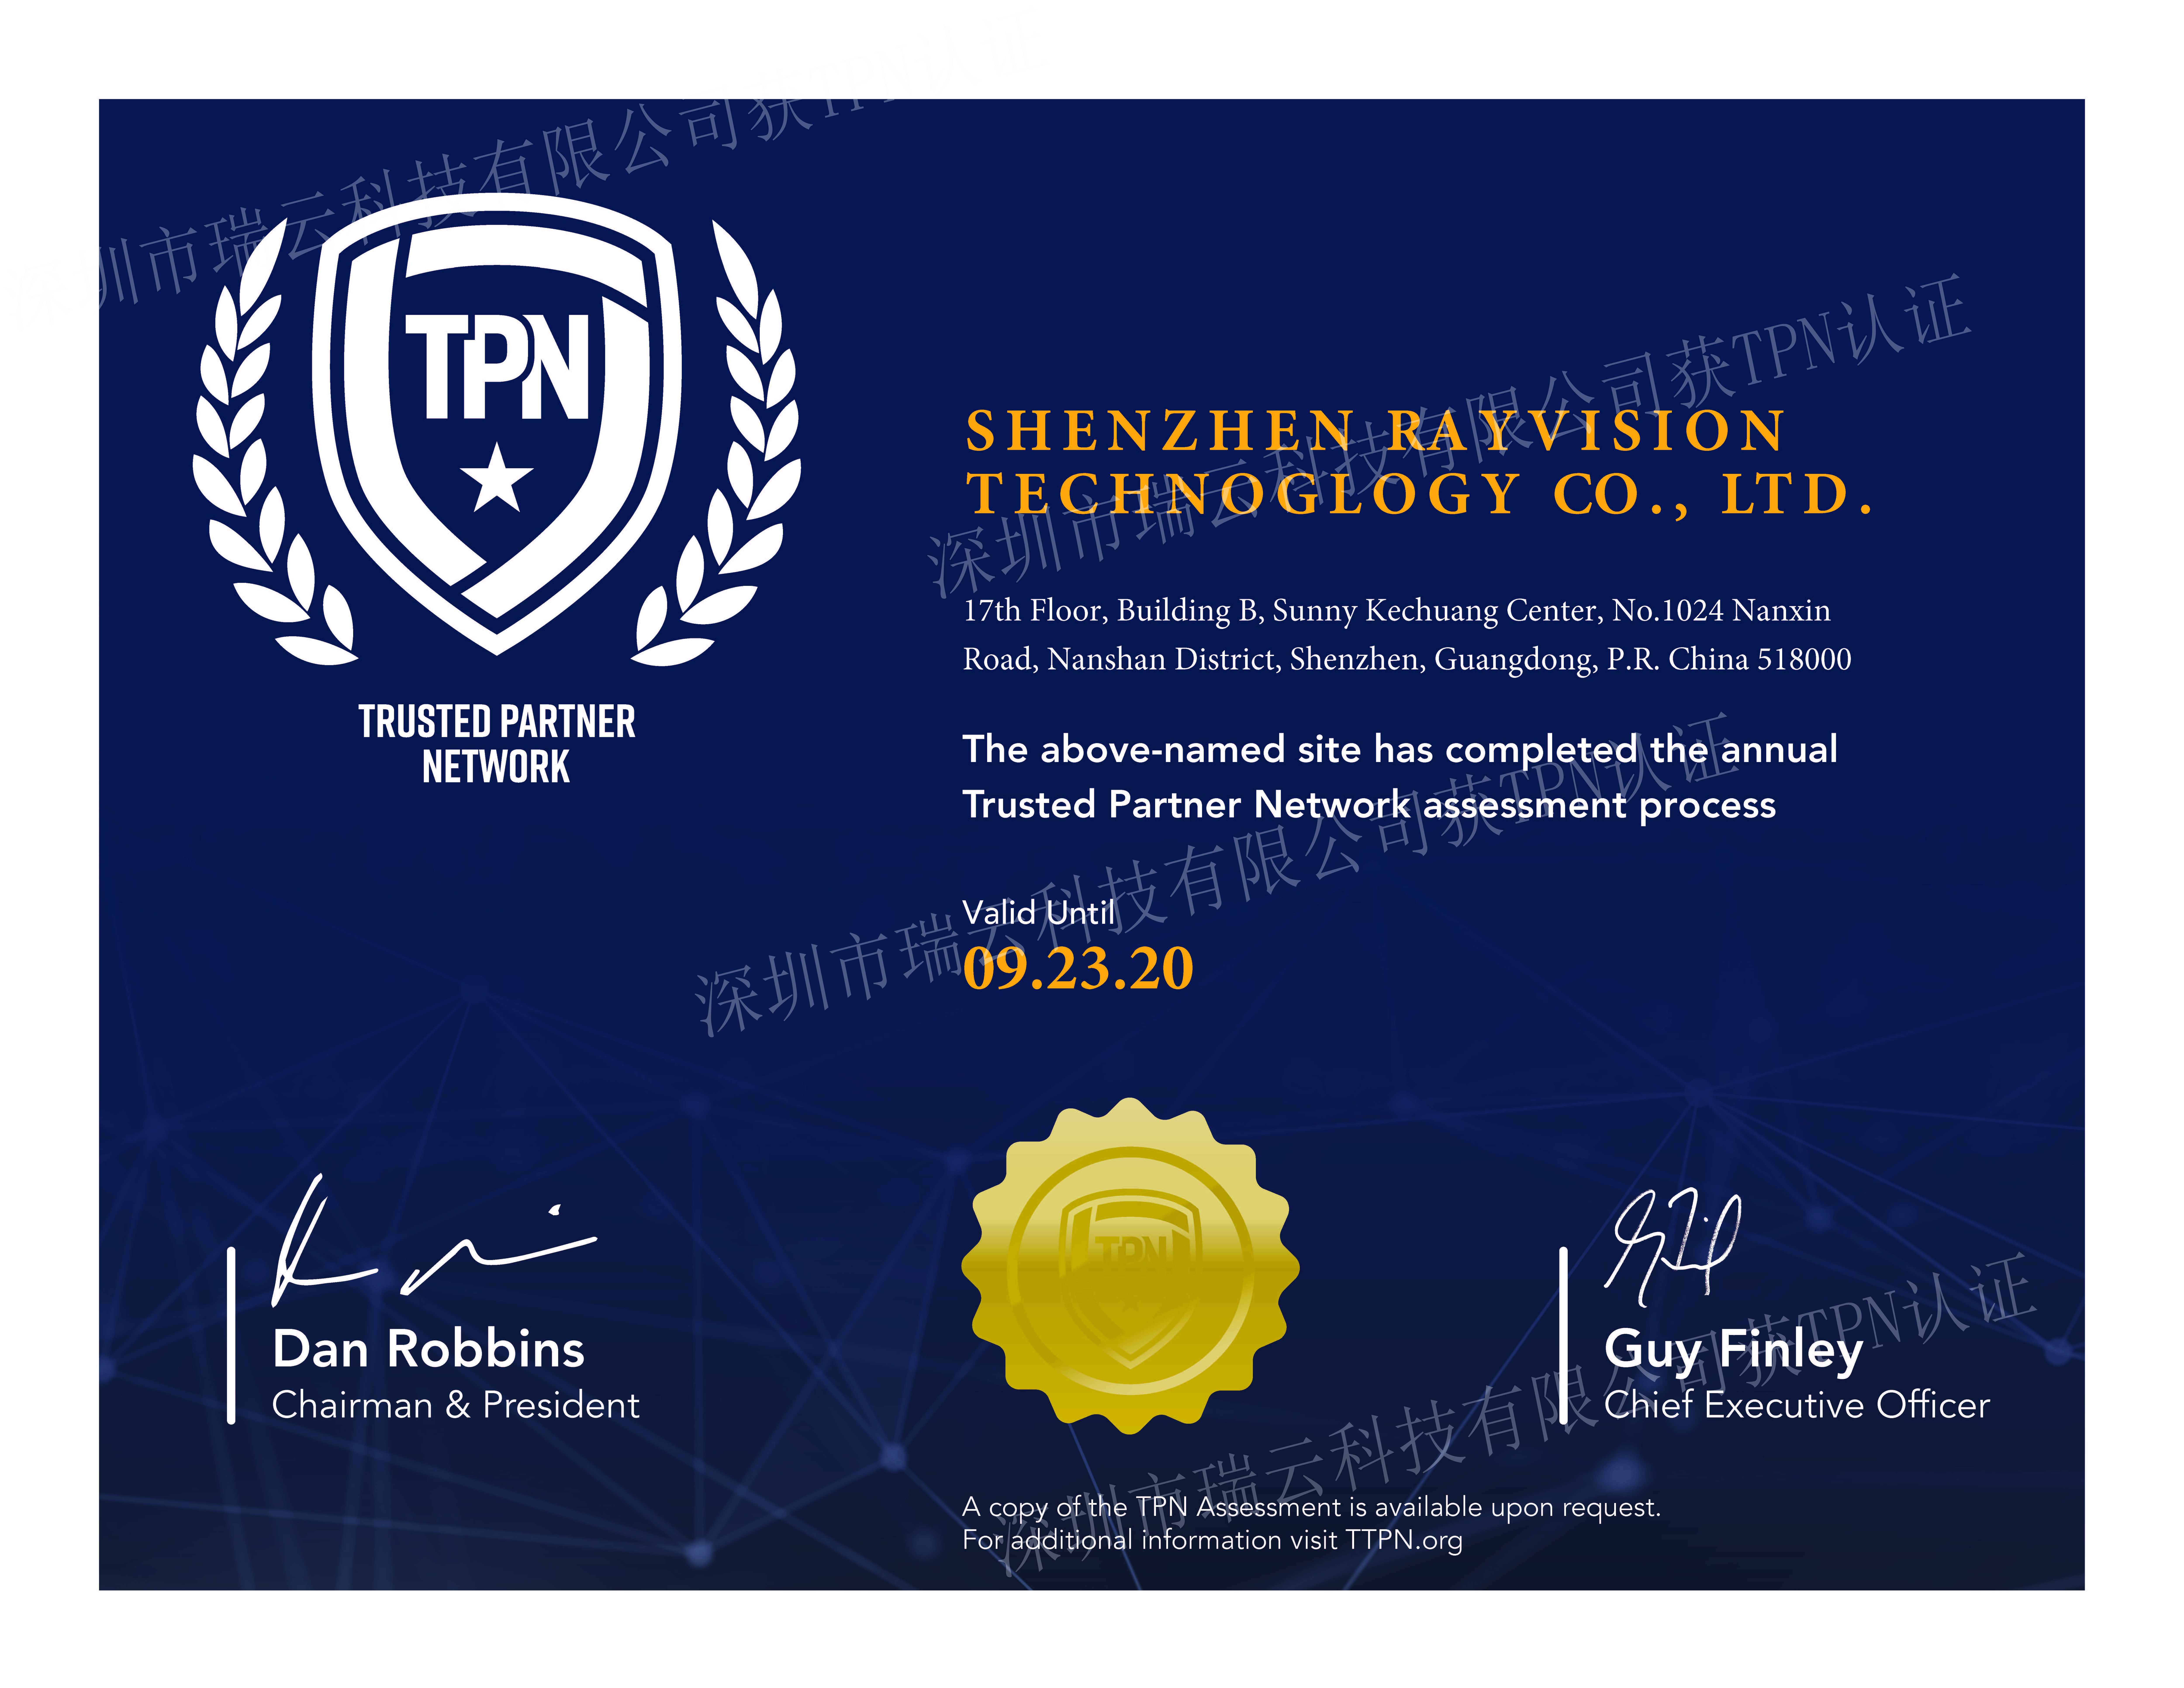 Shenzhen Rayvision Technology Co., Ltd. - HR CoAC